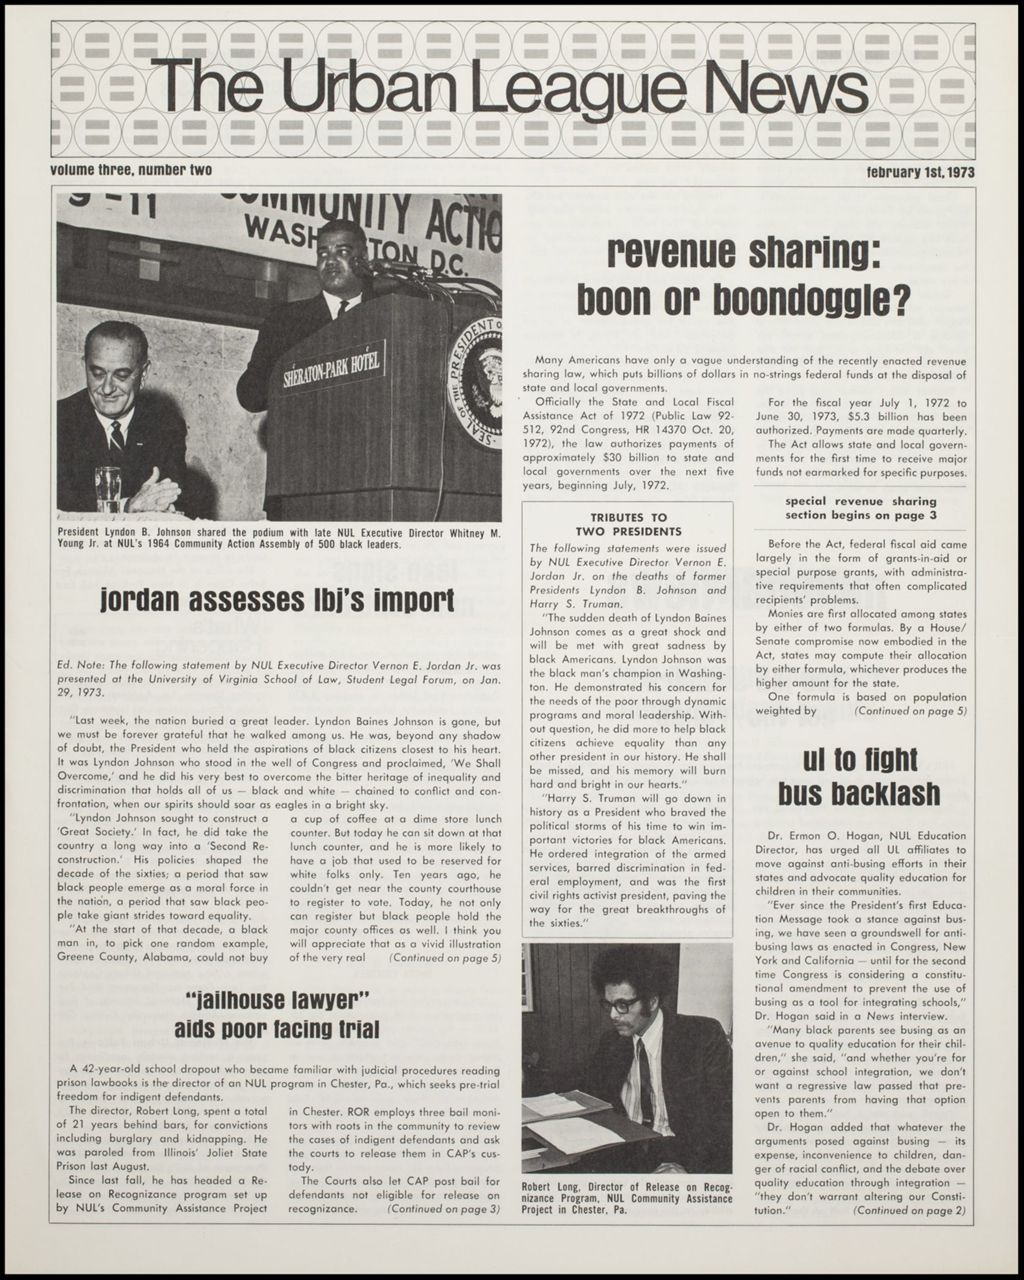 Miniature of The Urban League News, Volume III, Numbers 2-5, 1973 (Folder IV-758d)